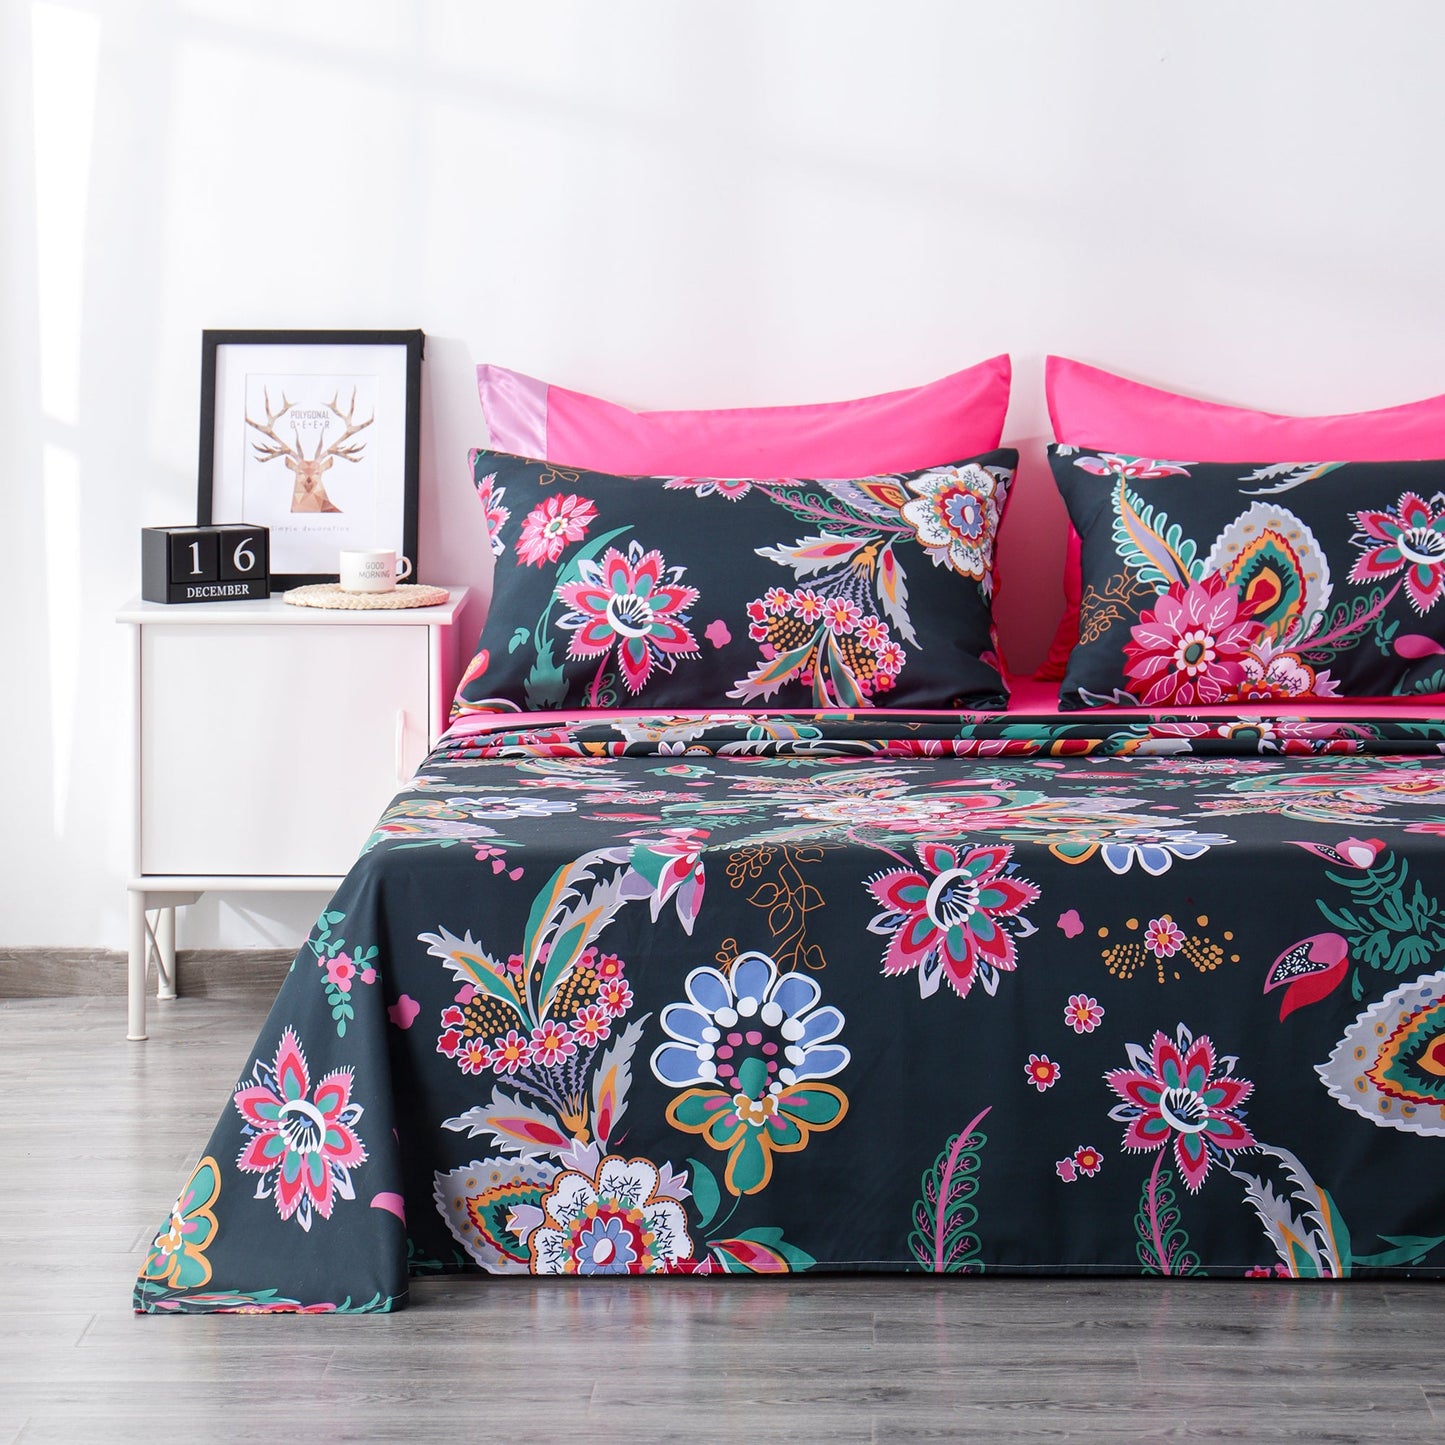 6 Piece Bed Sheet set-Pink floral